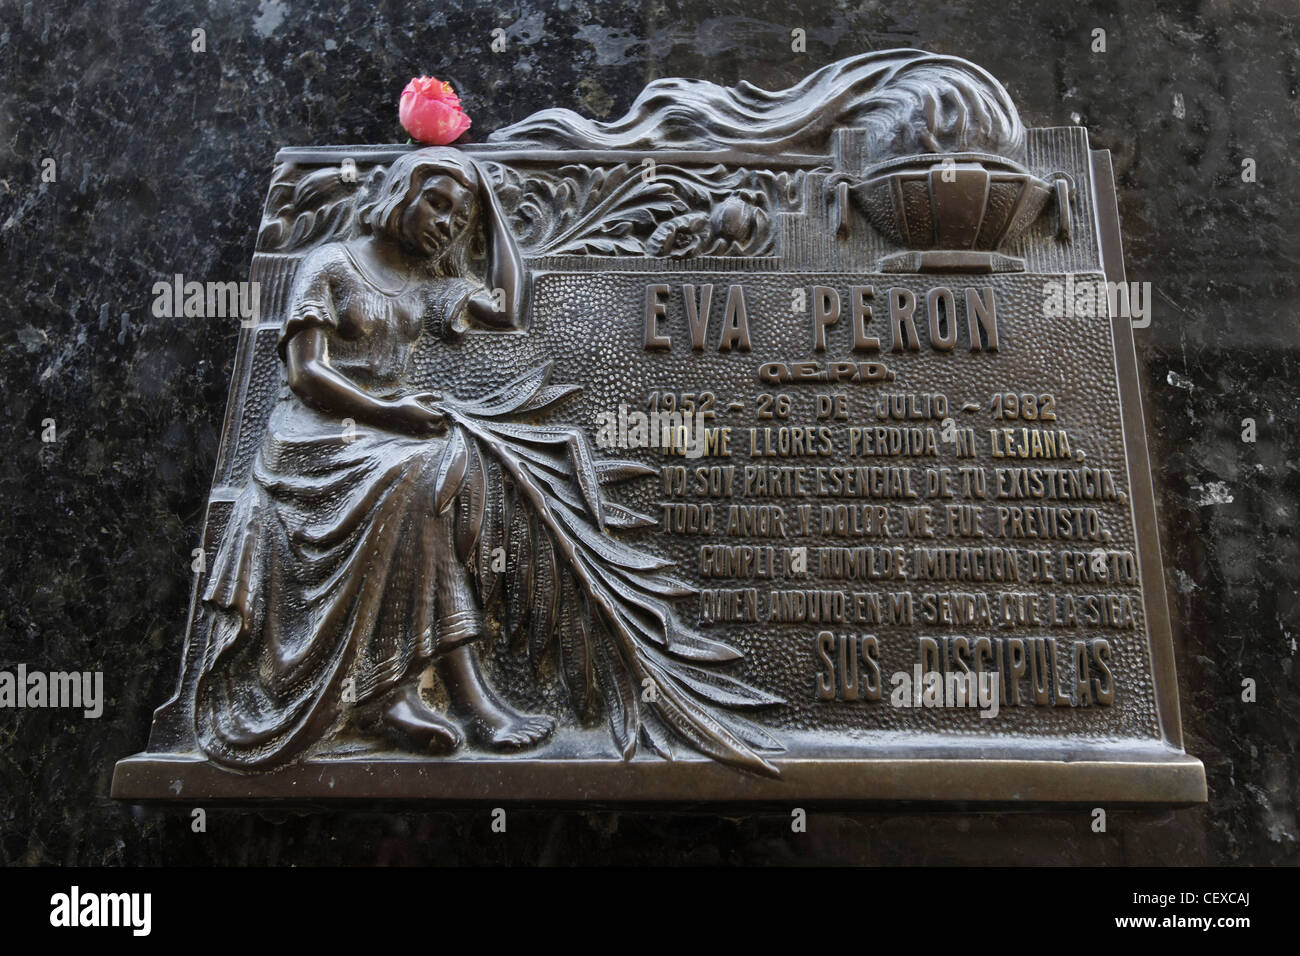 Evita Peron Grave Monument at La Recoleta Cemetery, Buenos Aires, Argentina Stock Photo